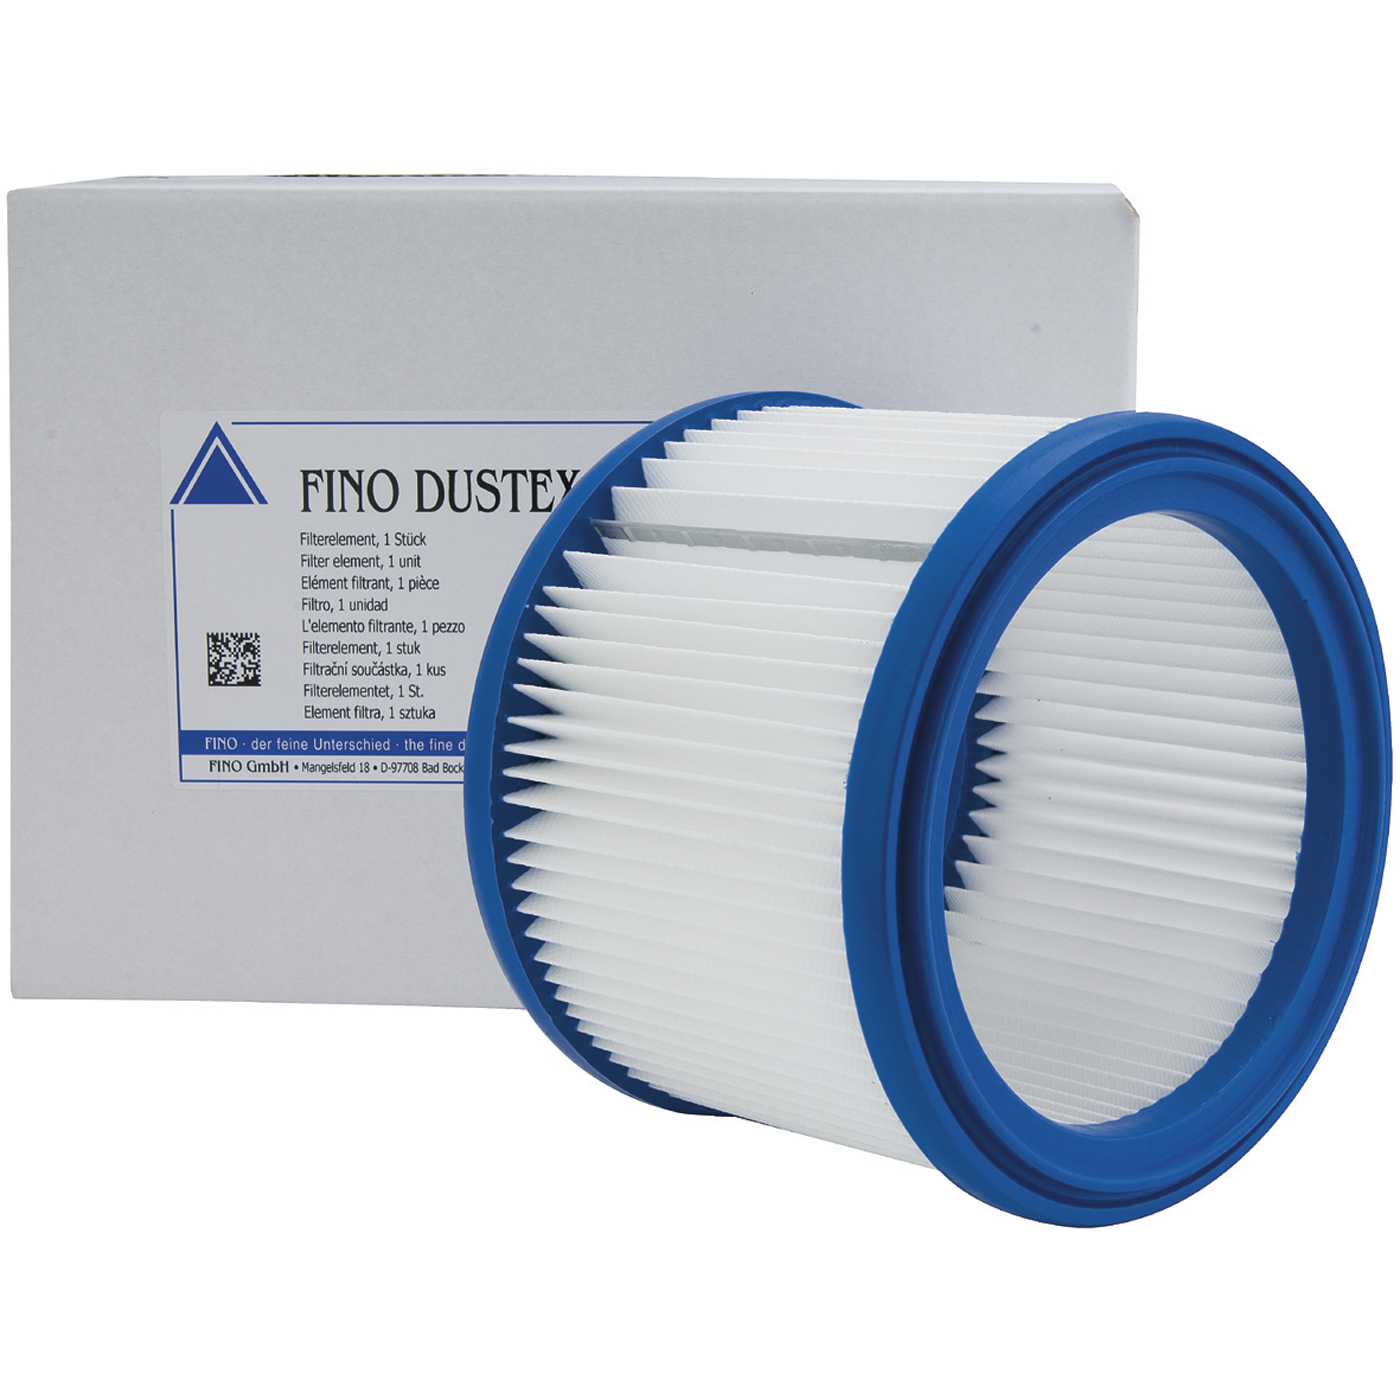 Filter Element, for FINO DUSTEX - 1 piece